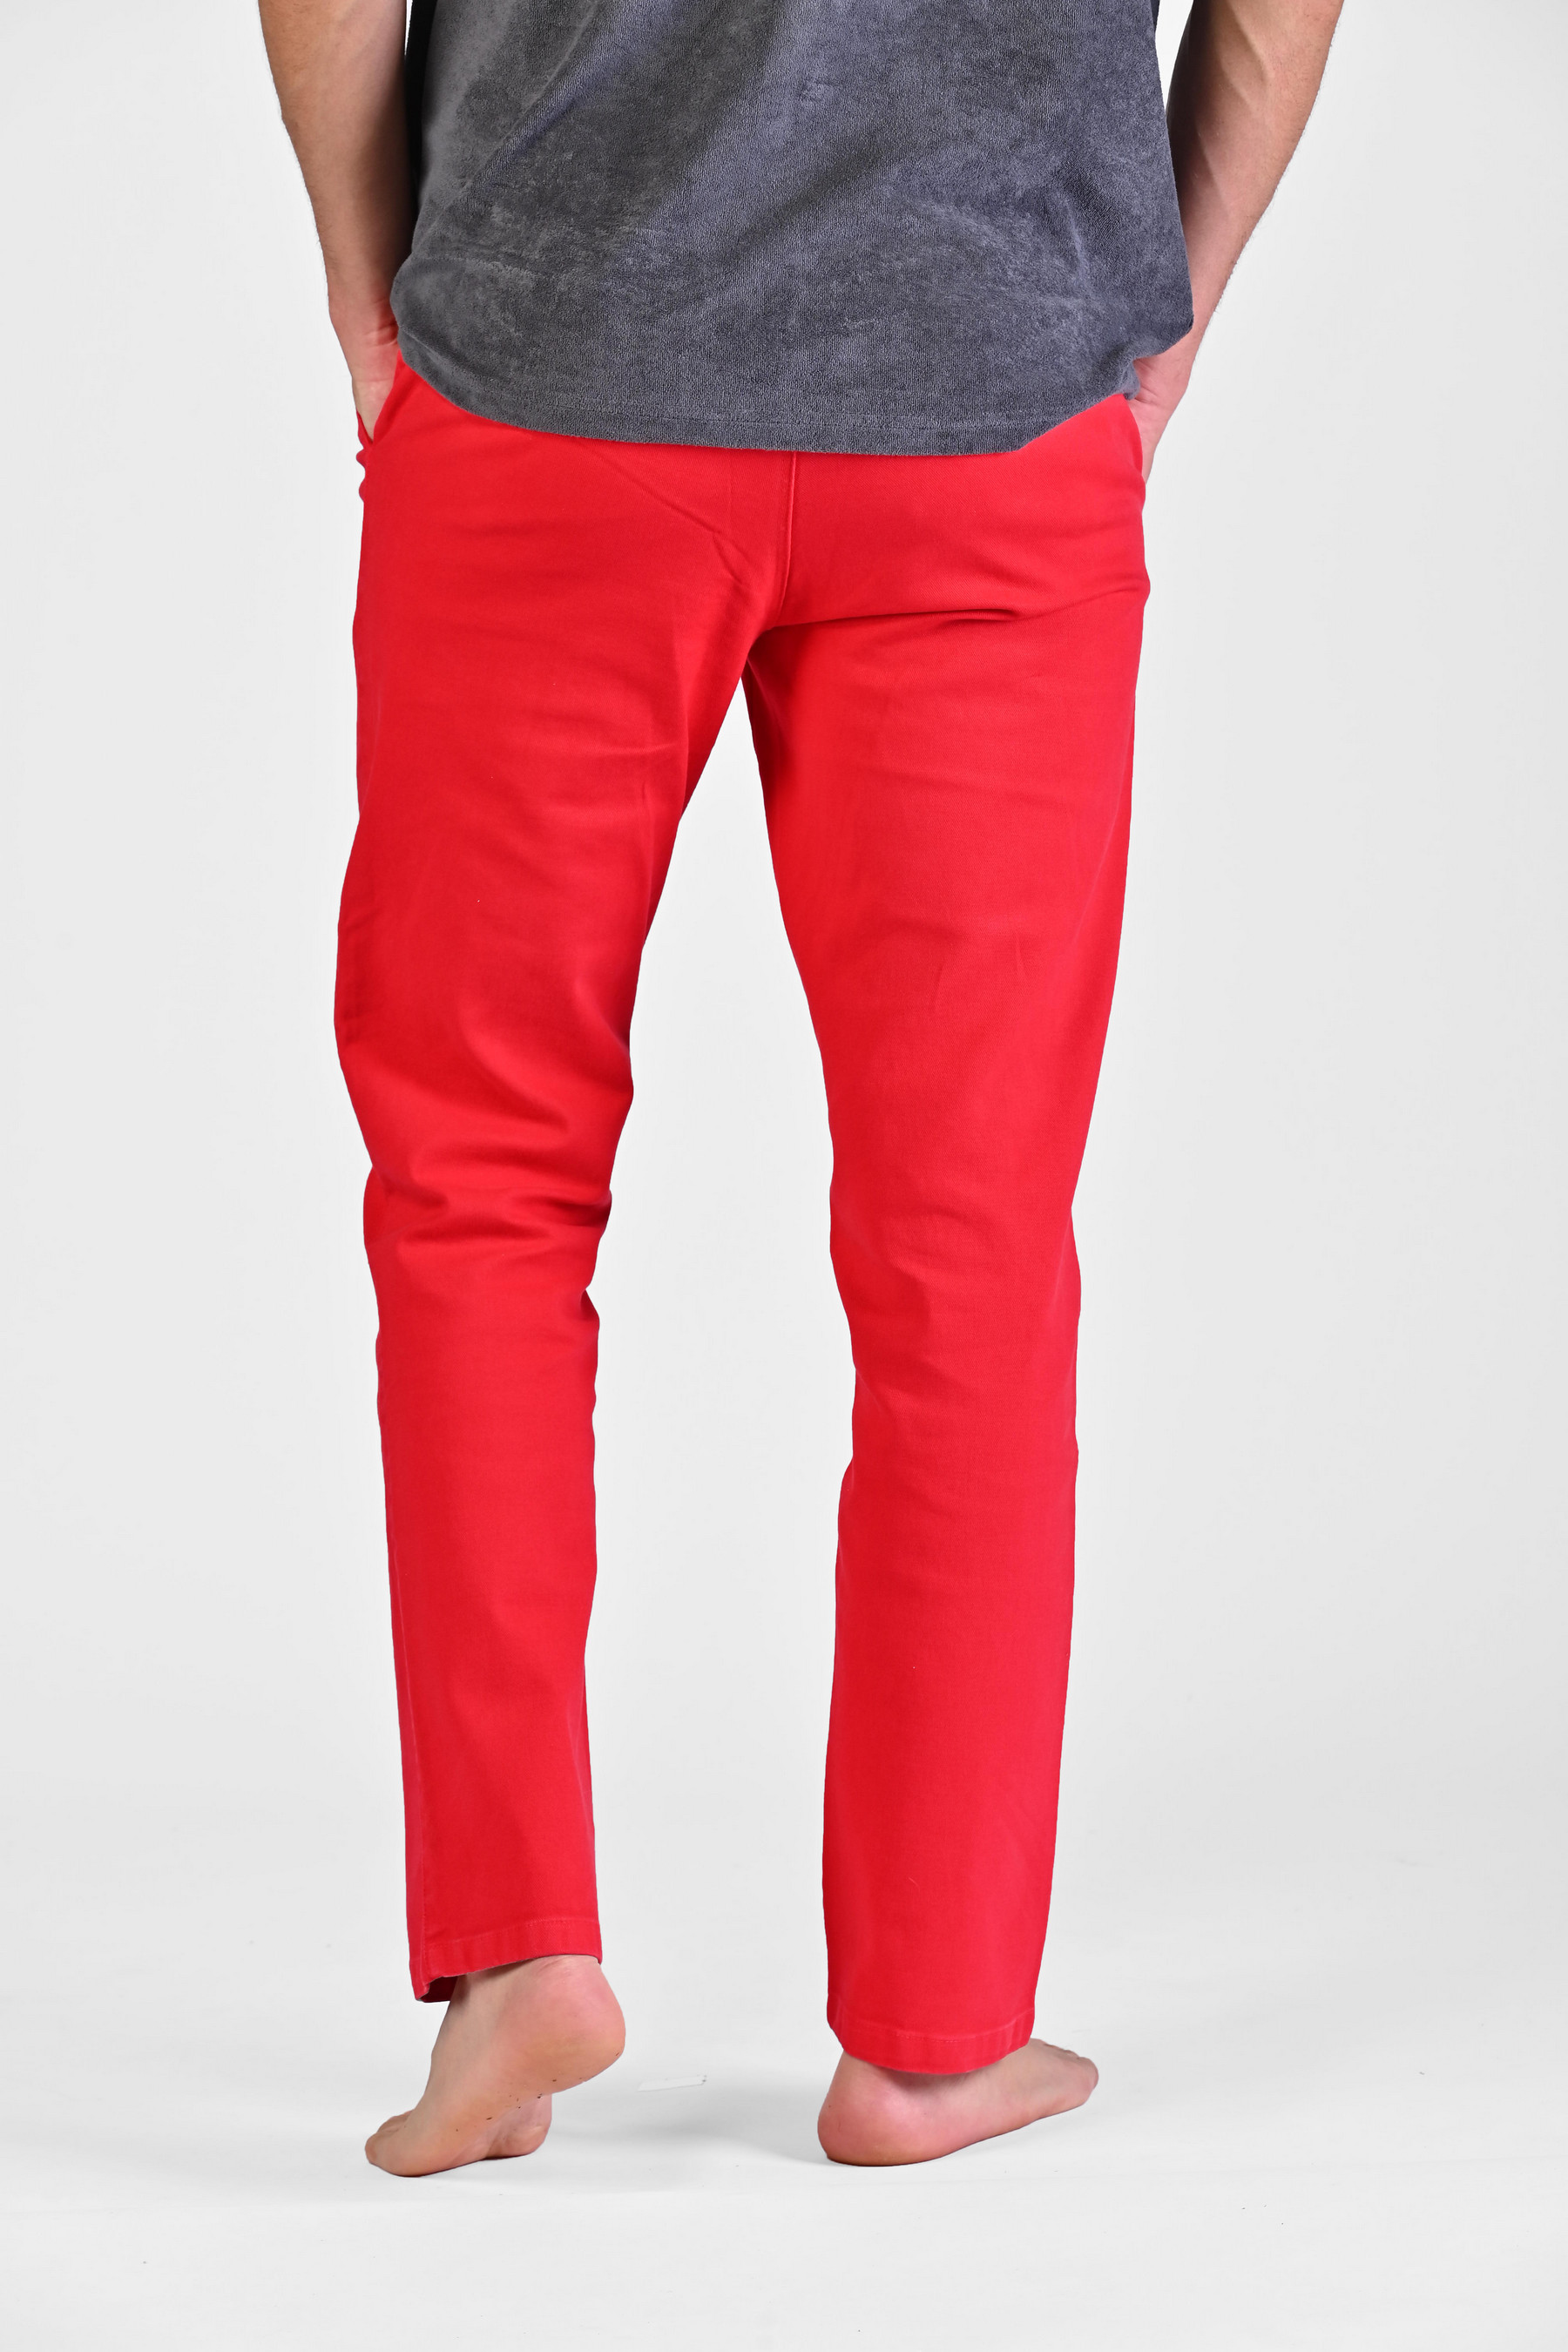 Available] Hermes Luxury Brand Hoodie Pants Pod Design